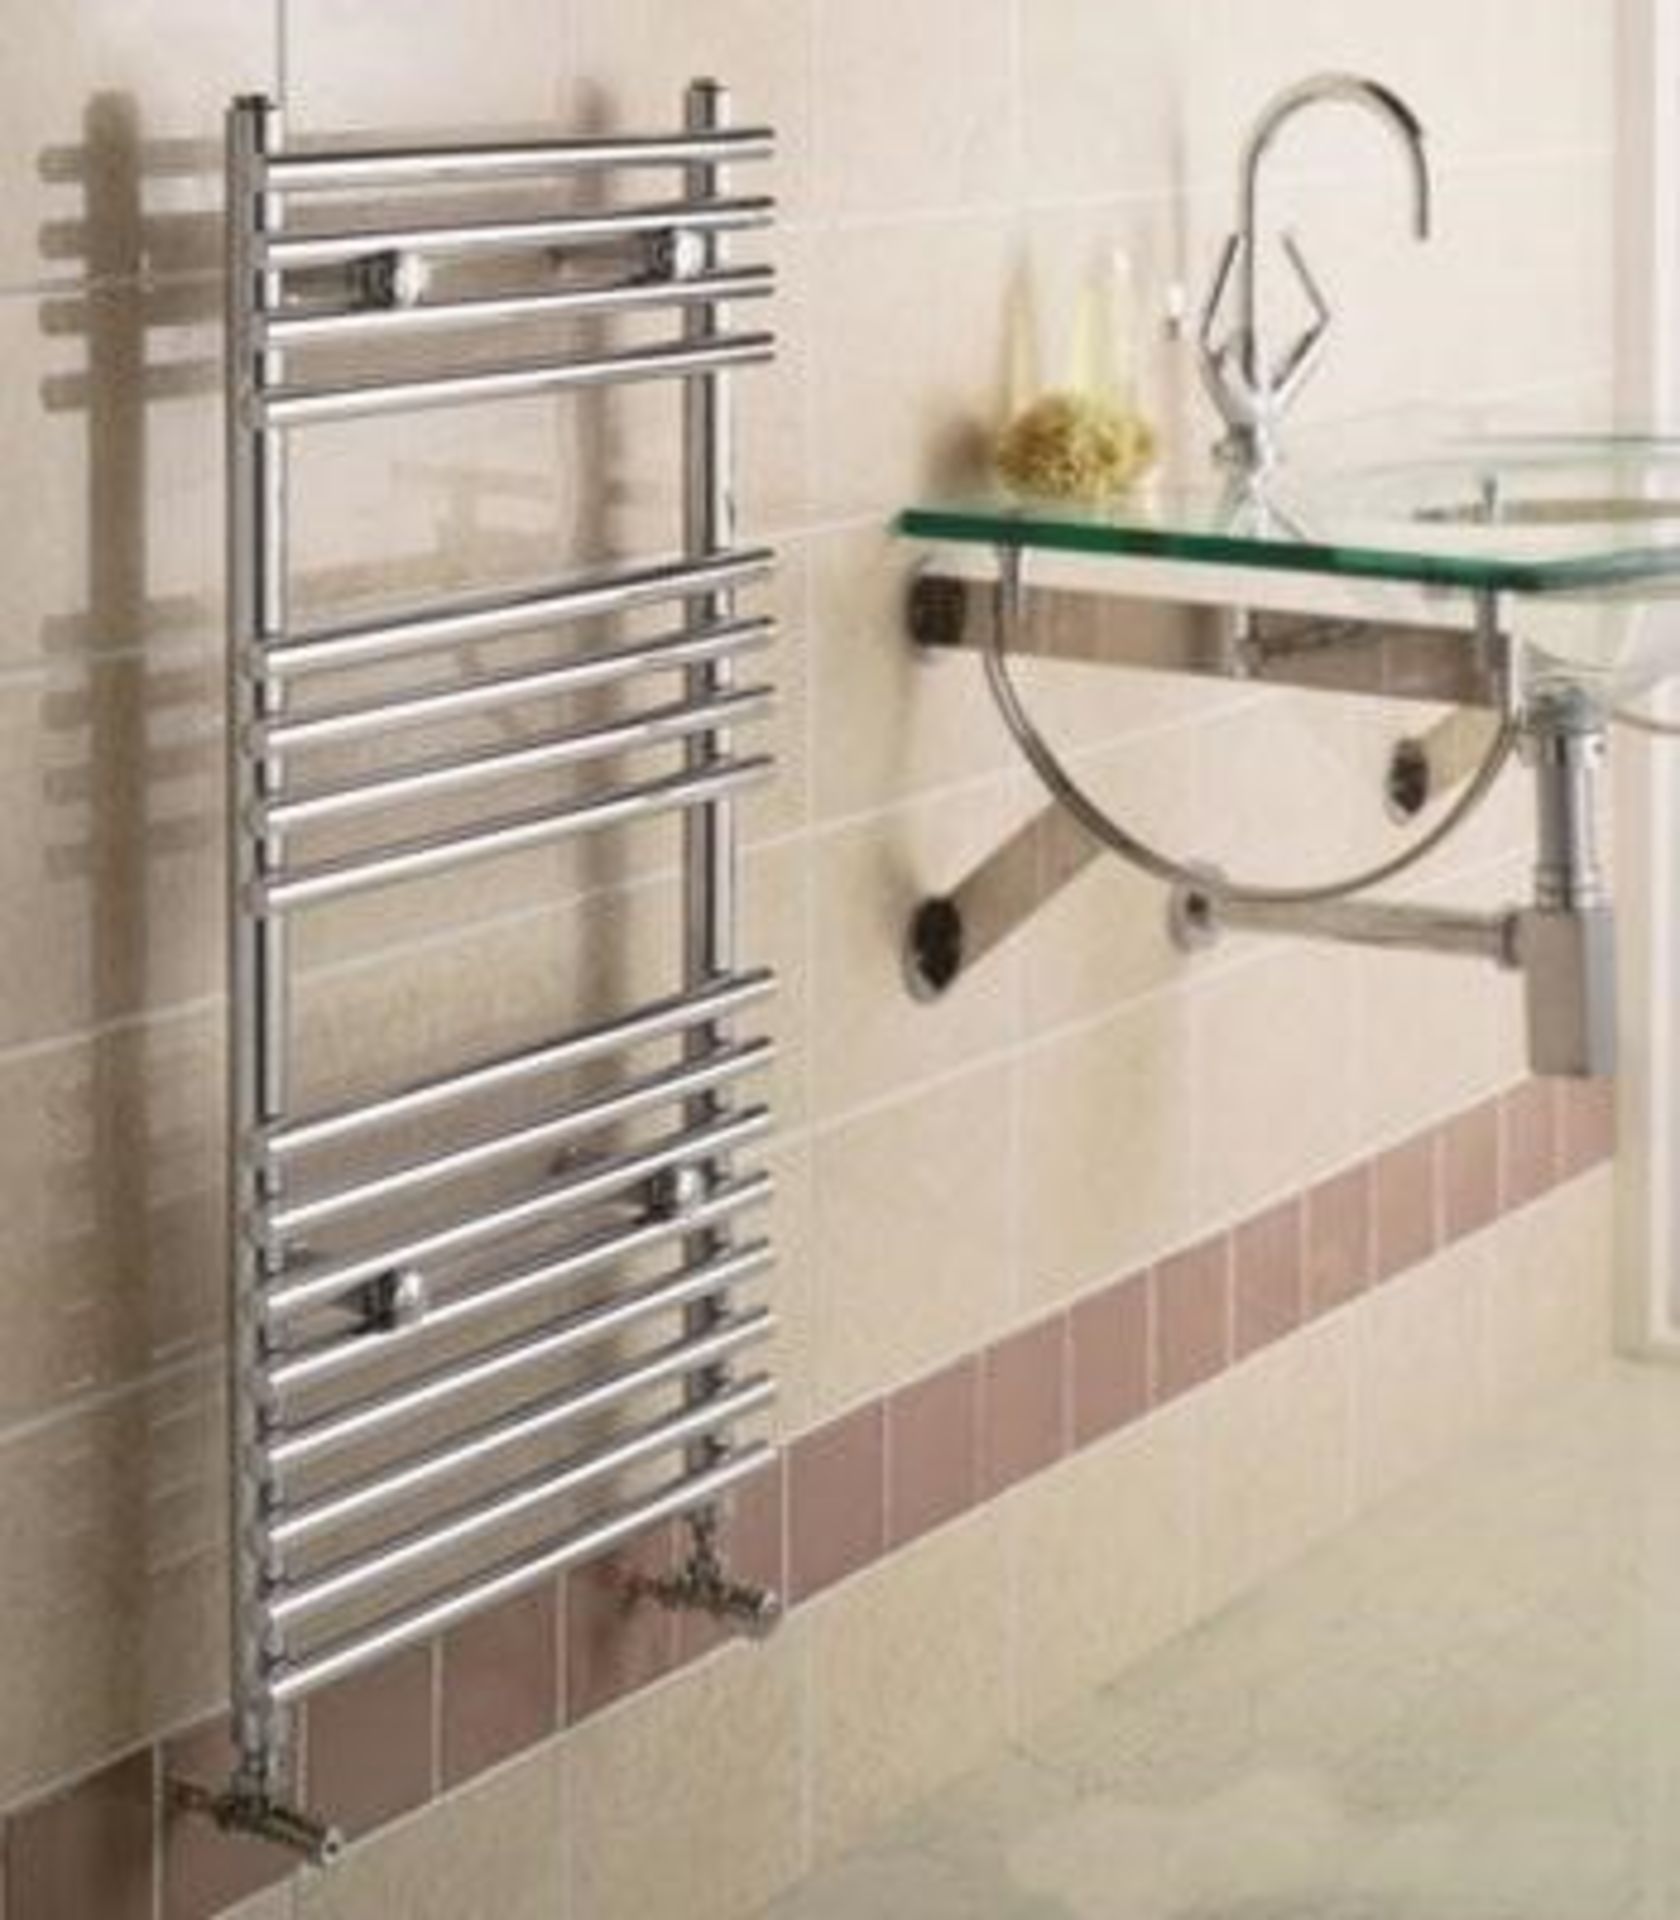 6 x Quinn Topaz Bathroom Ladder Towel Rail - Modern Tube Design With Chrome Finish - Size Height - Image 3 of 3